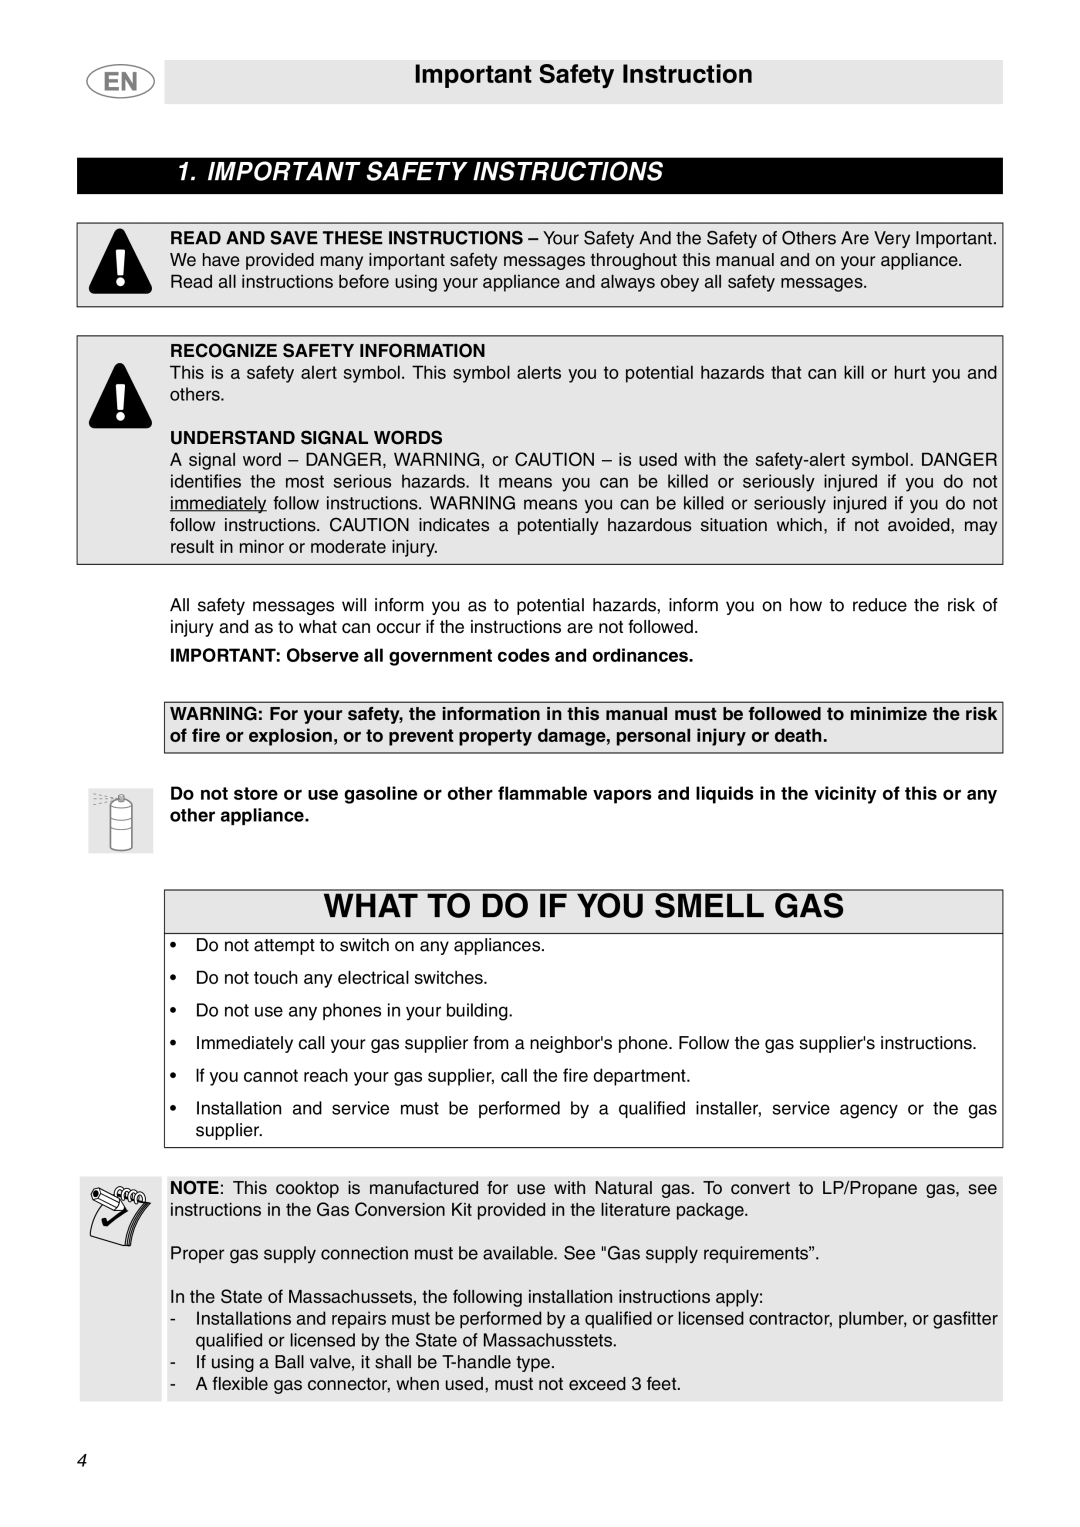 Smeg PU106 Gas, PU75, PU64 Important Safety Instruction, Recognize Safety Information, Understand Signal Words 